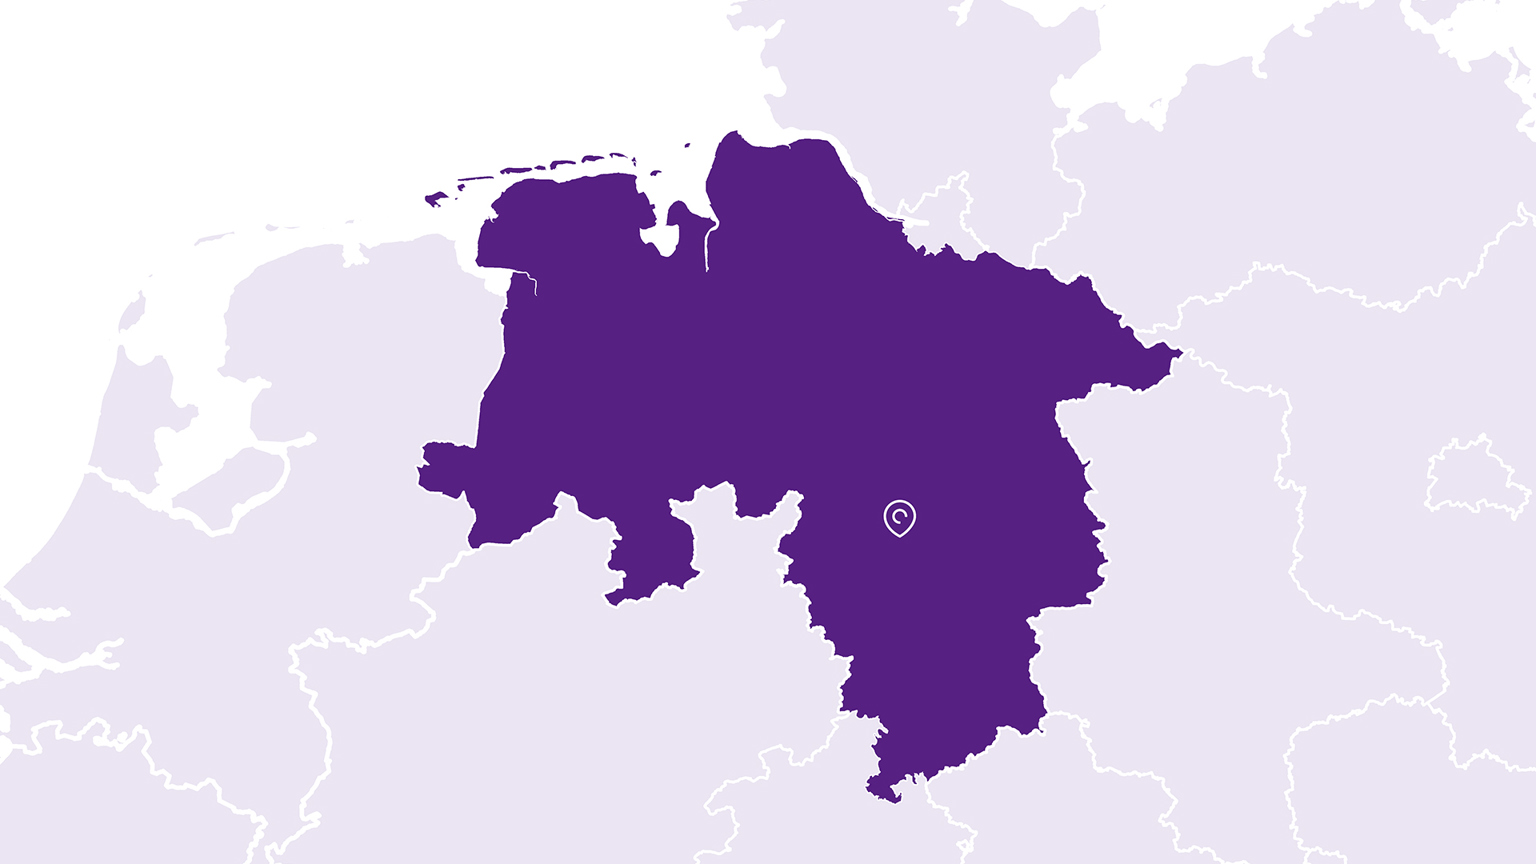 Landkarte Niedersachsen